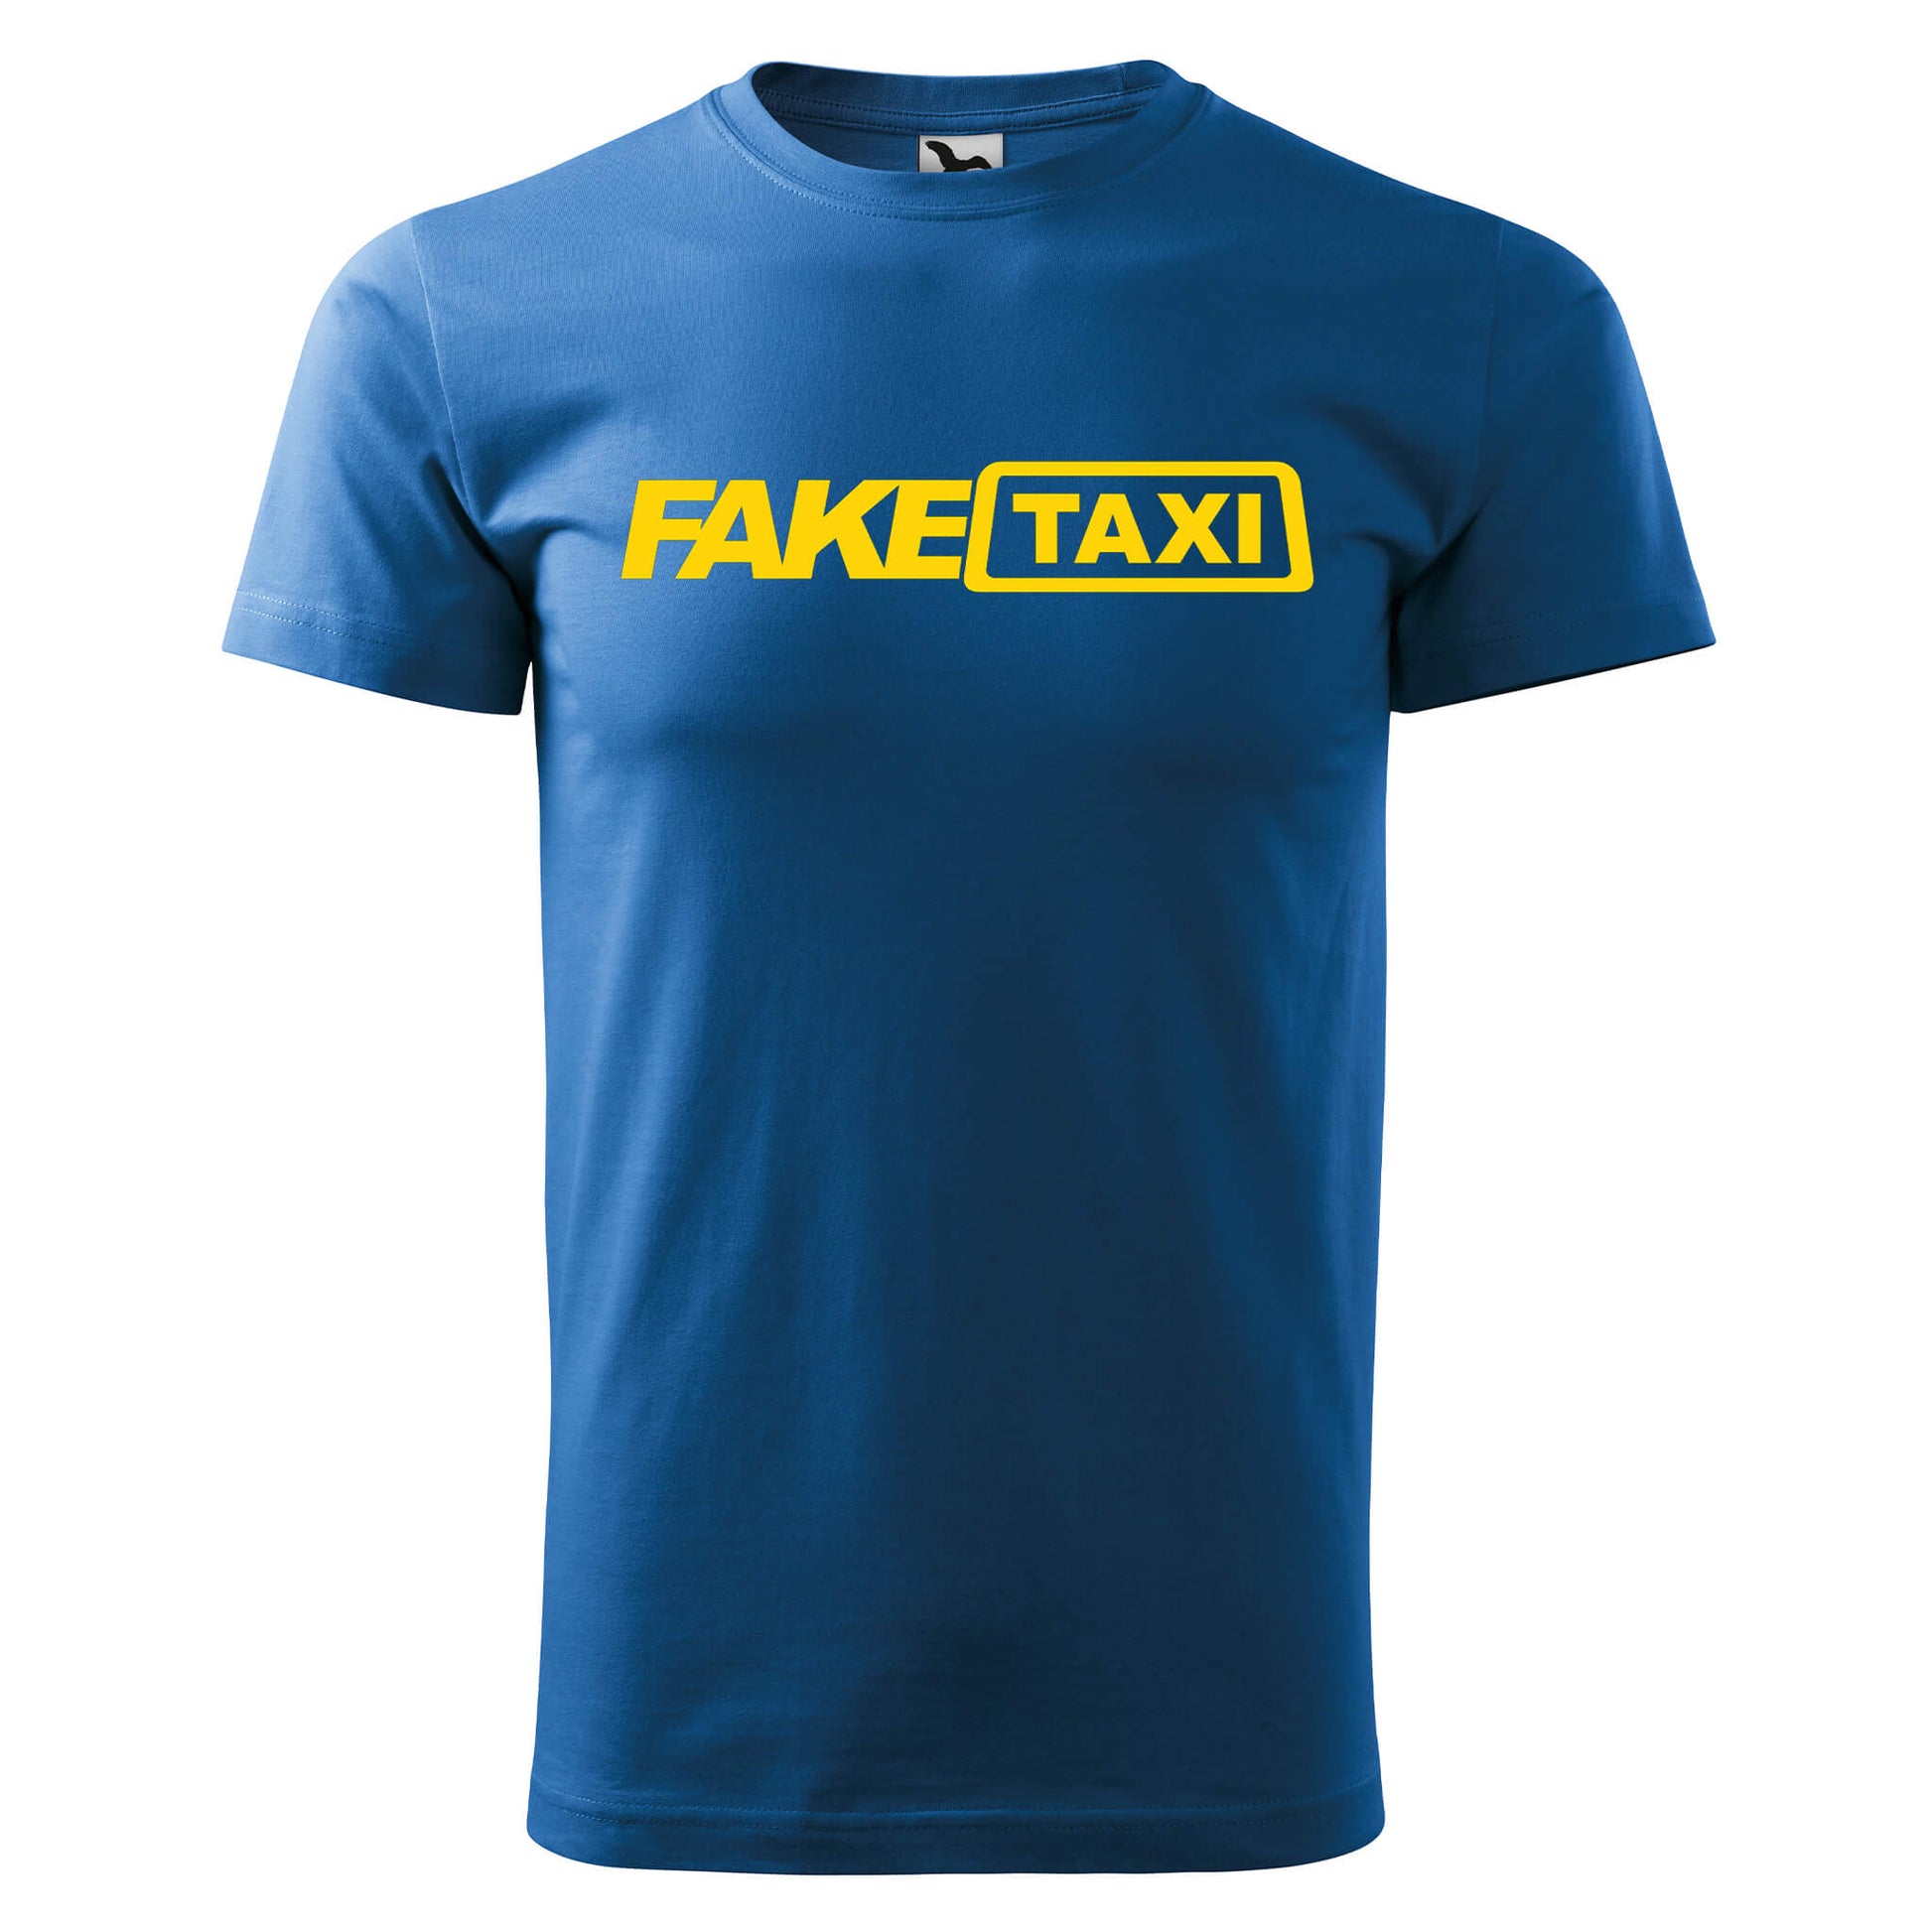 T-shirt - FakeTaxi - rvdesignprint